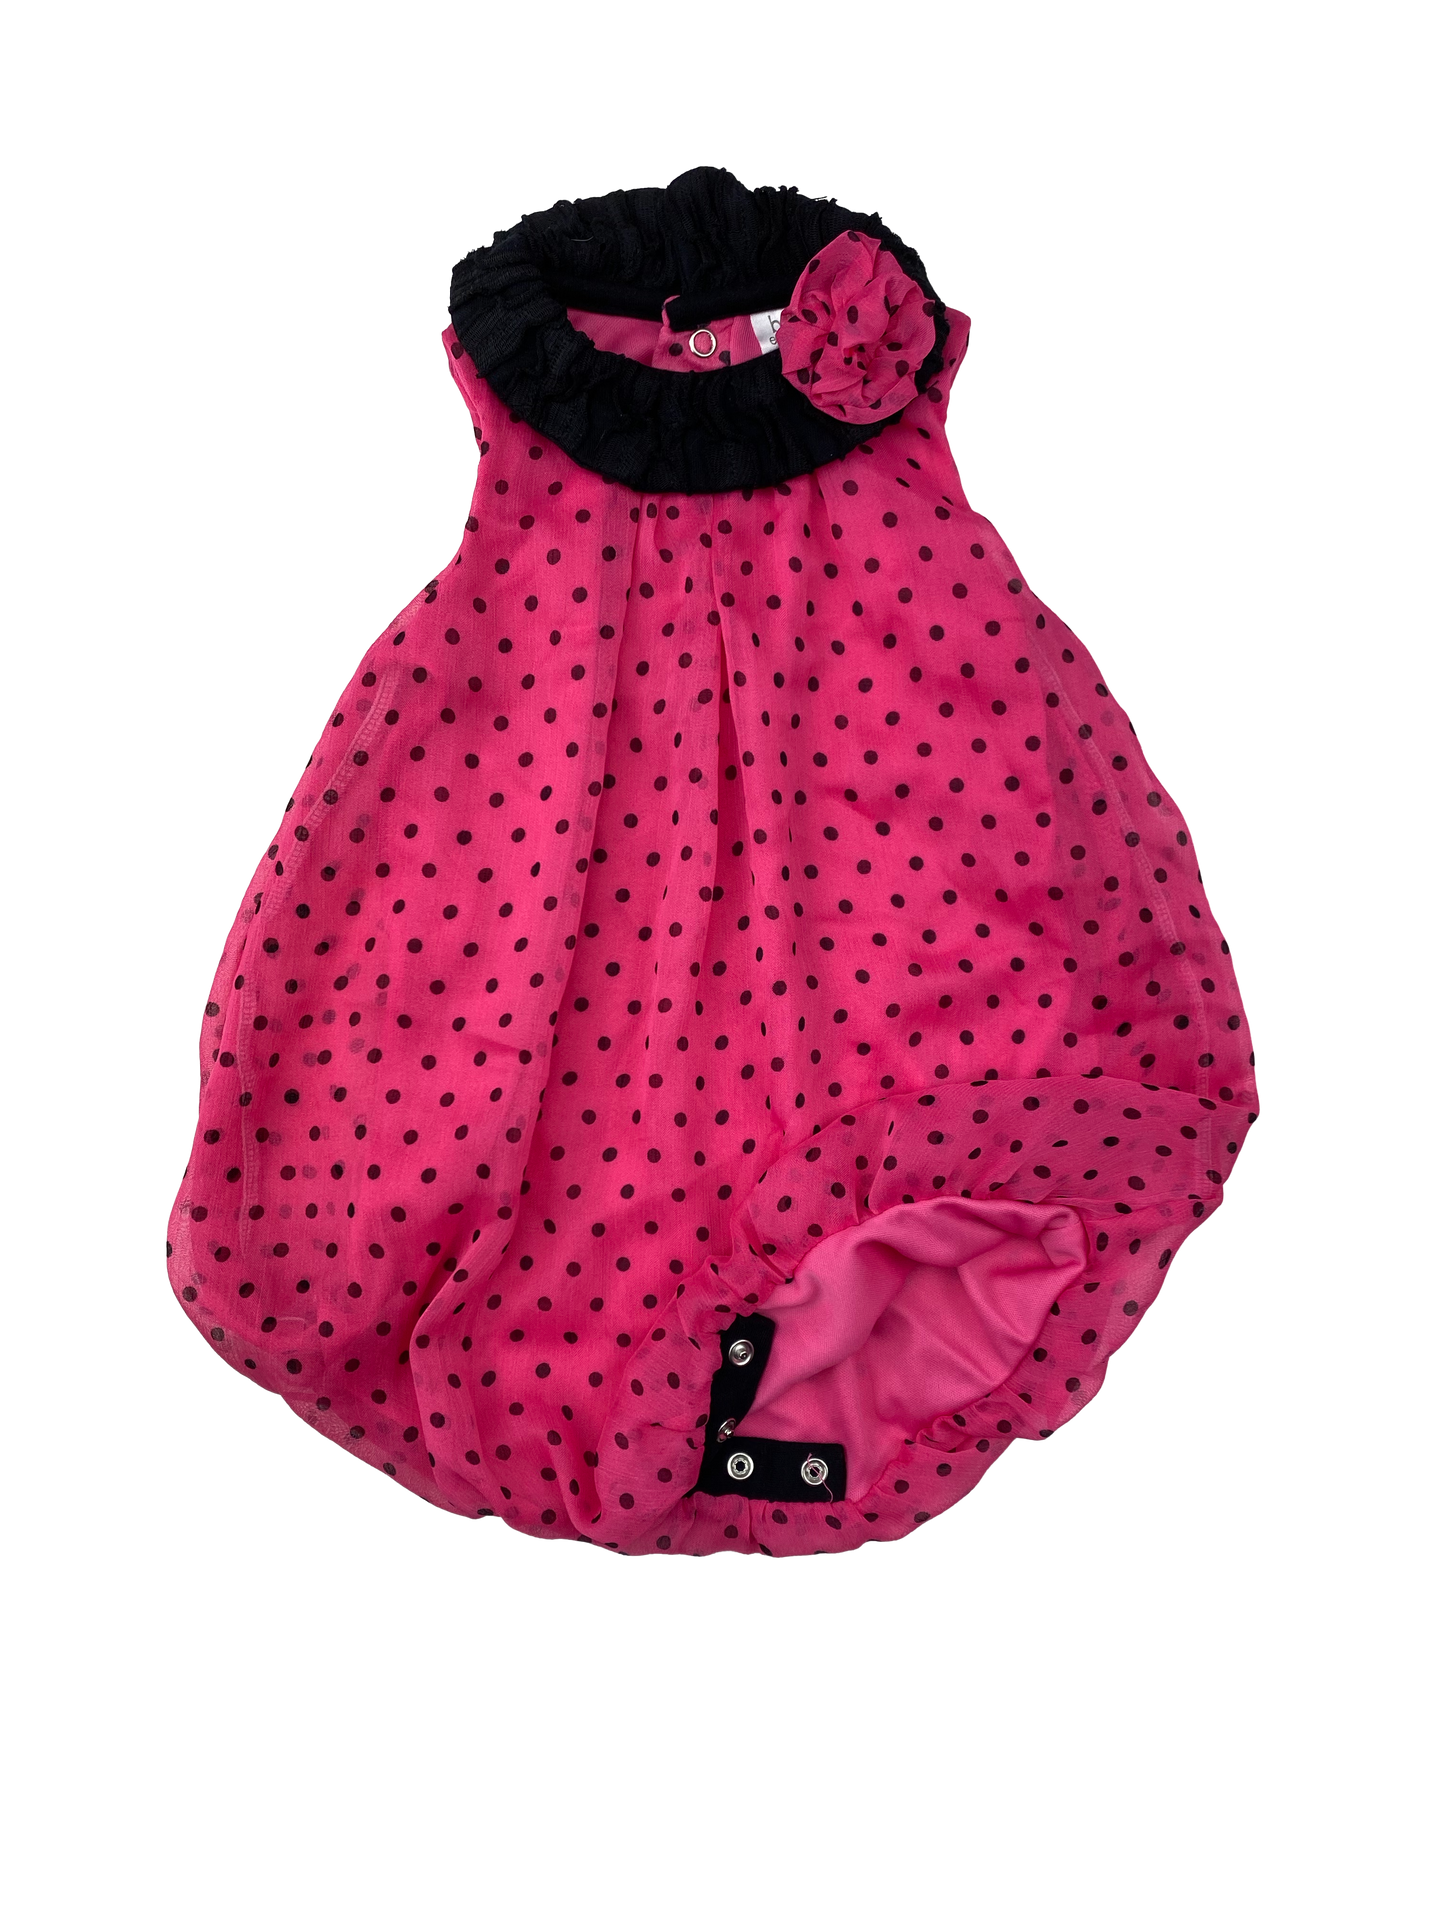 Baby Essentials Pink Polka Dot Dress with Black Collar 9M